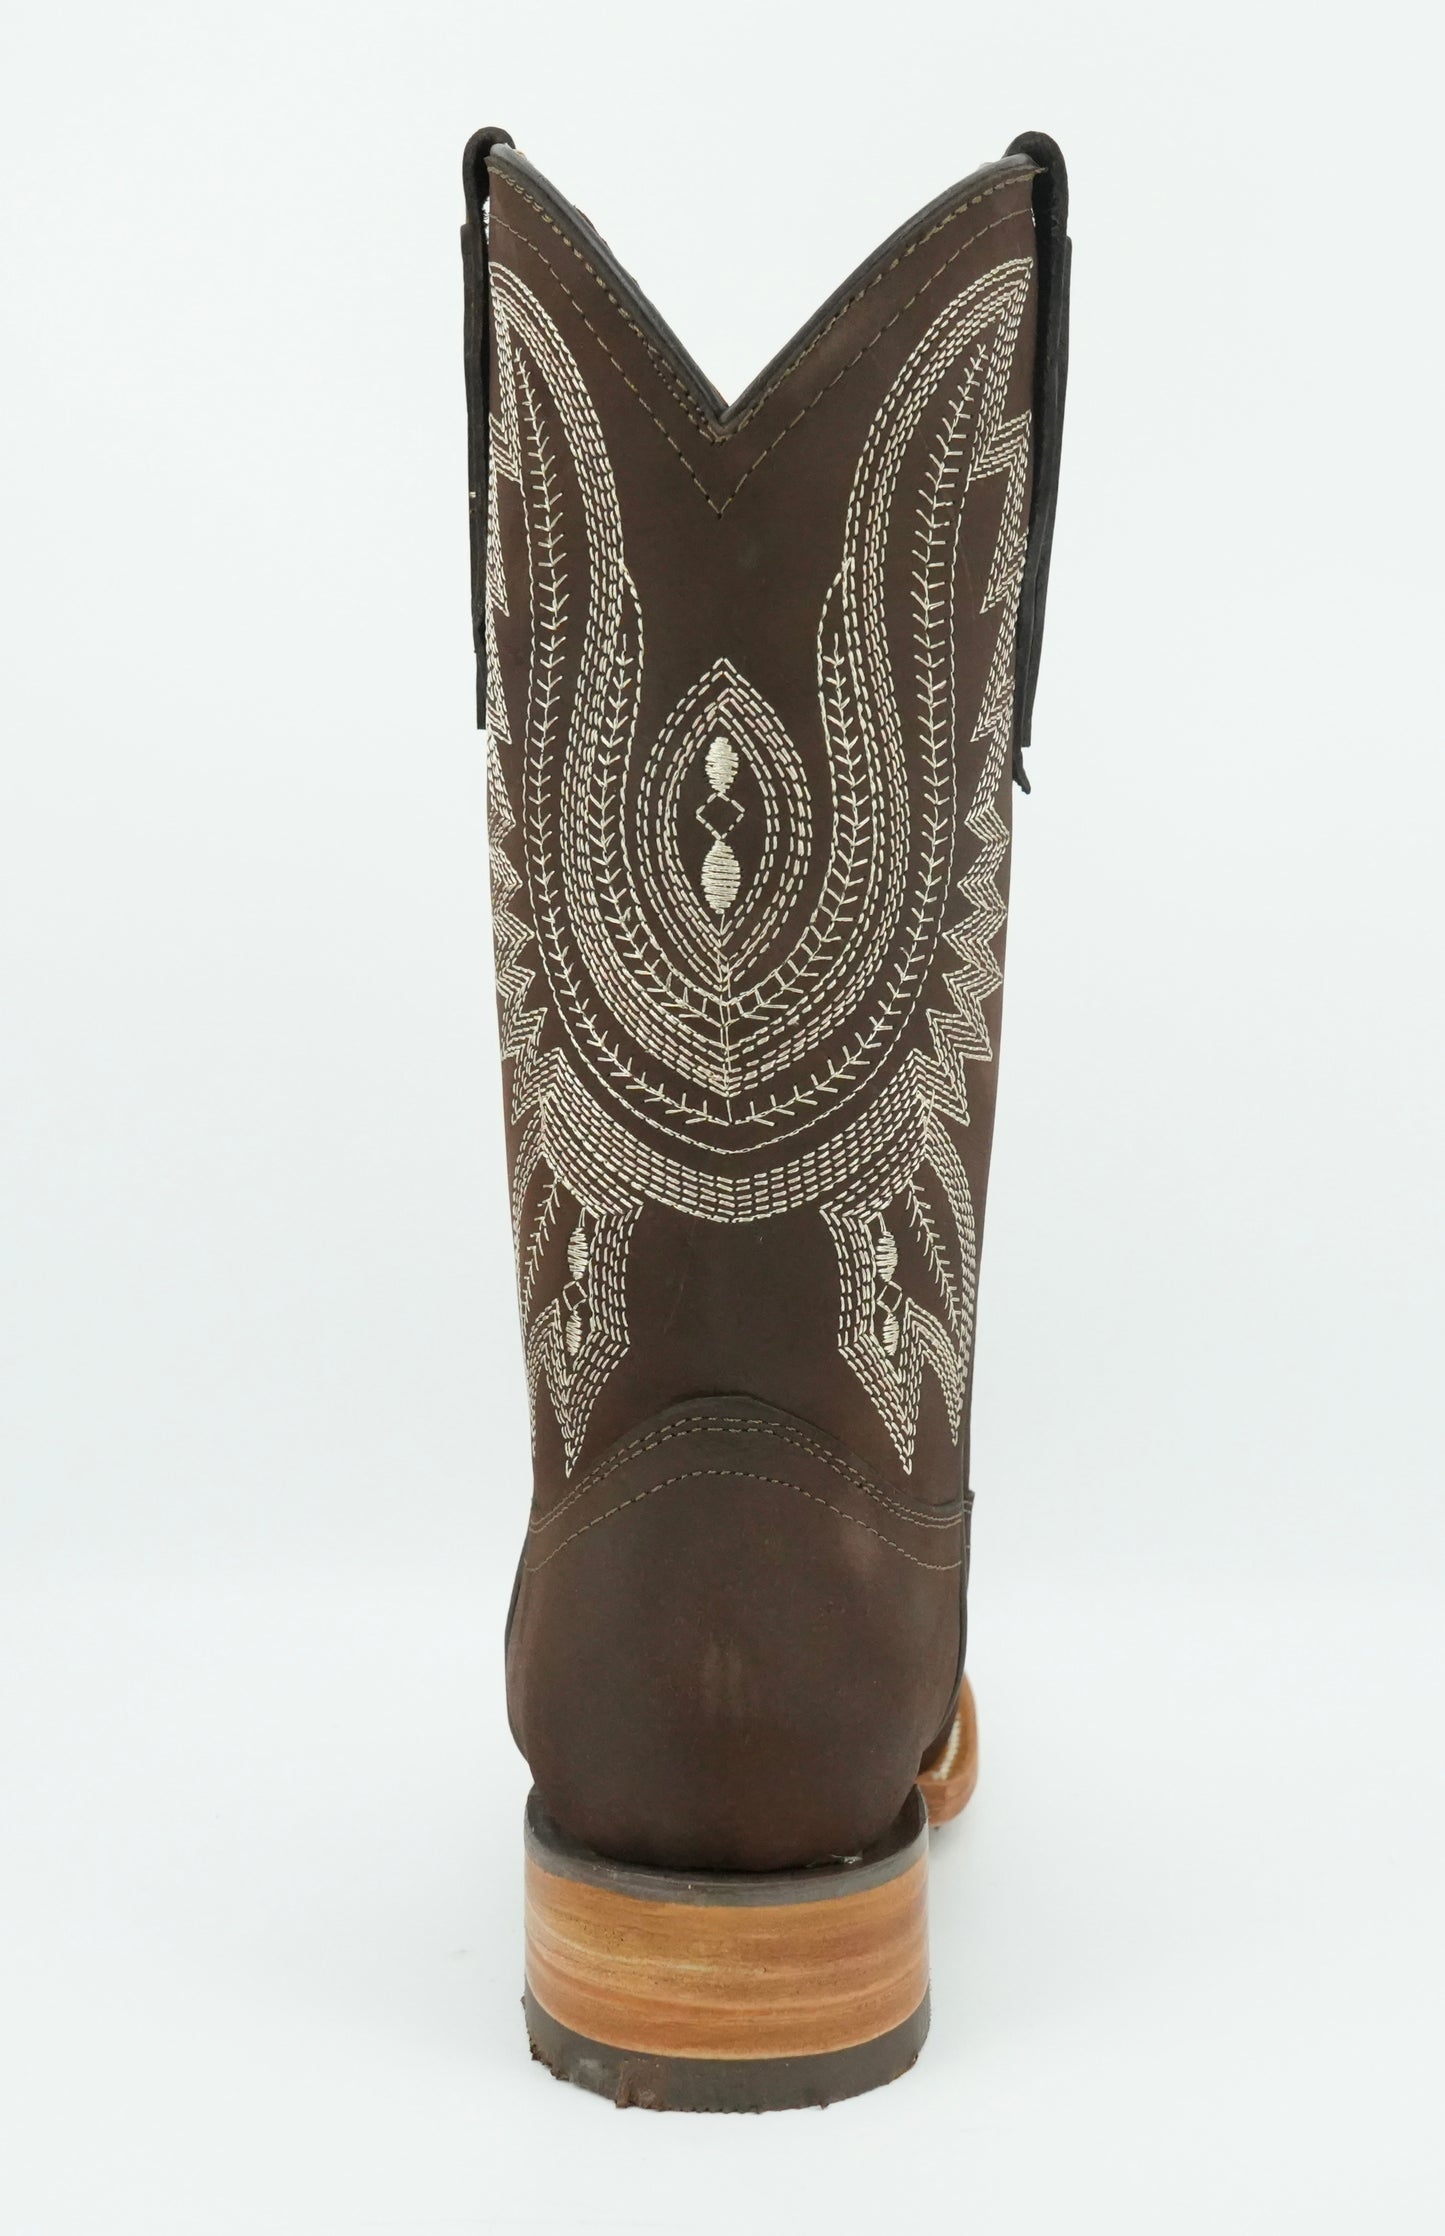 La Sierra Women's Mocha Embroidered Feathers Square Toe Boot